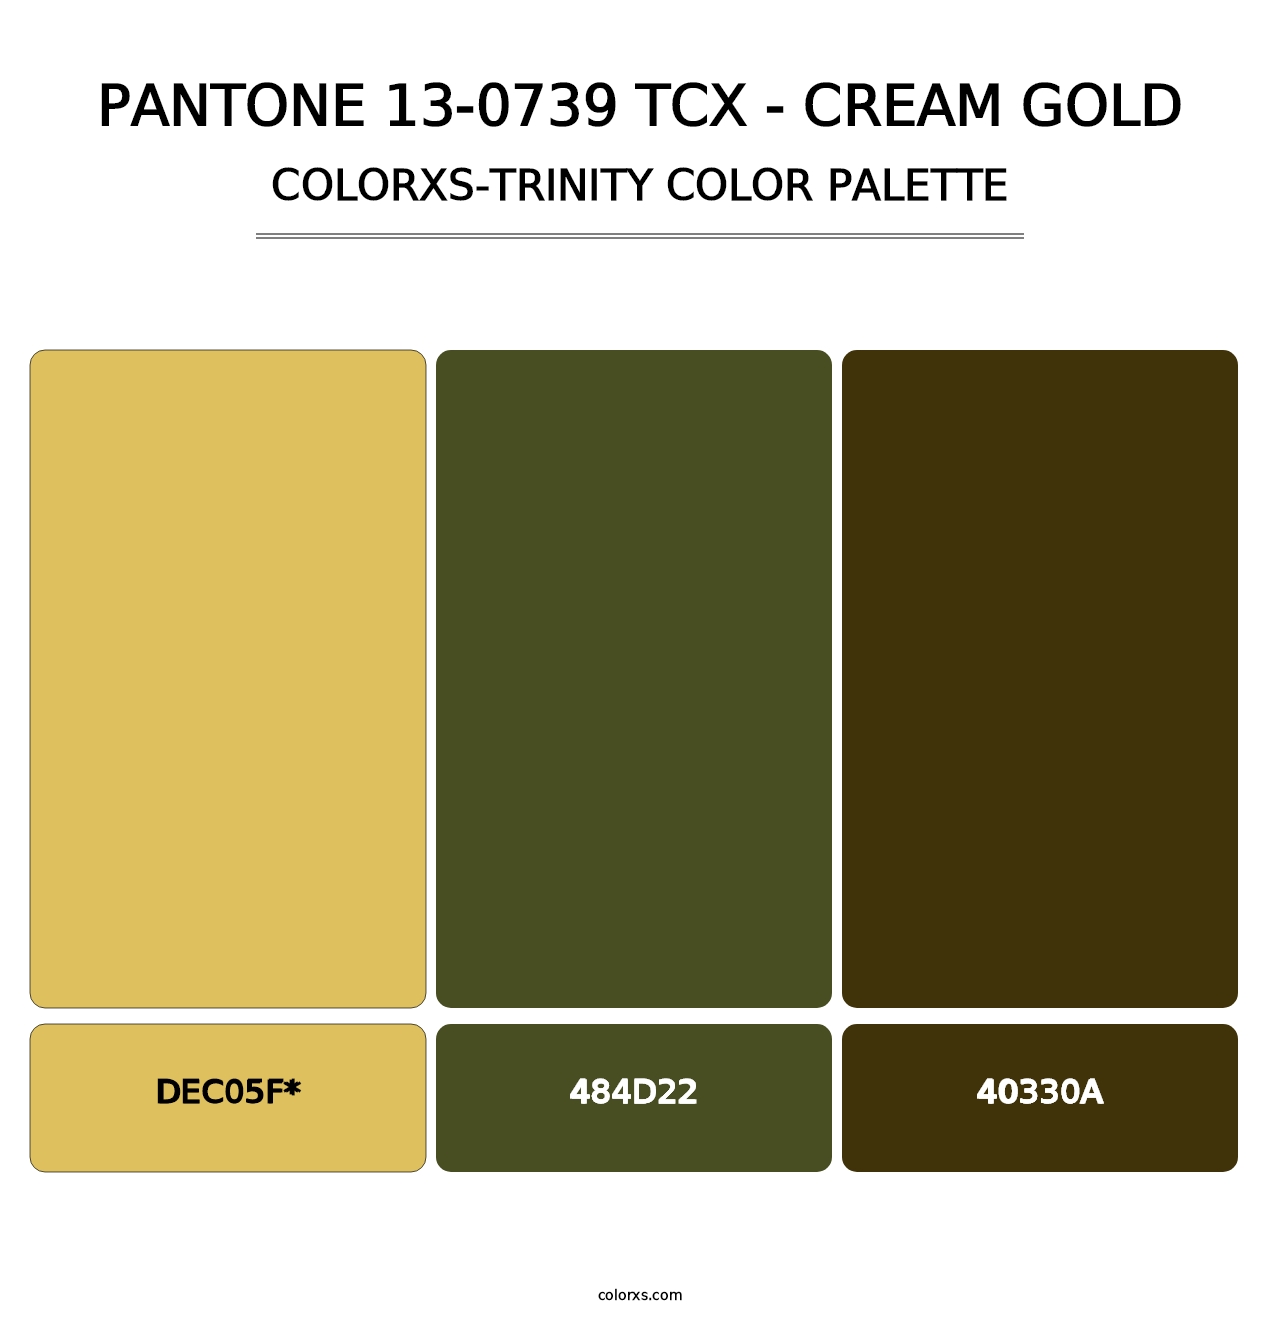 PANTONE 13-0739 TCX - Cream Gold - Colorxs Trinity Palette